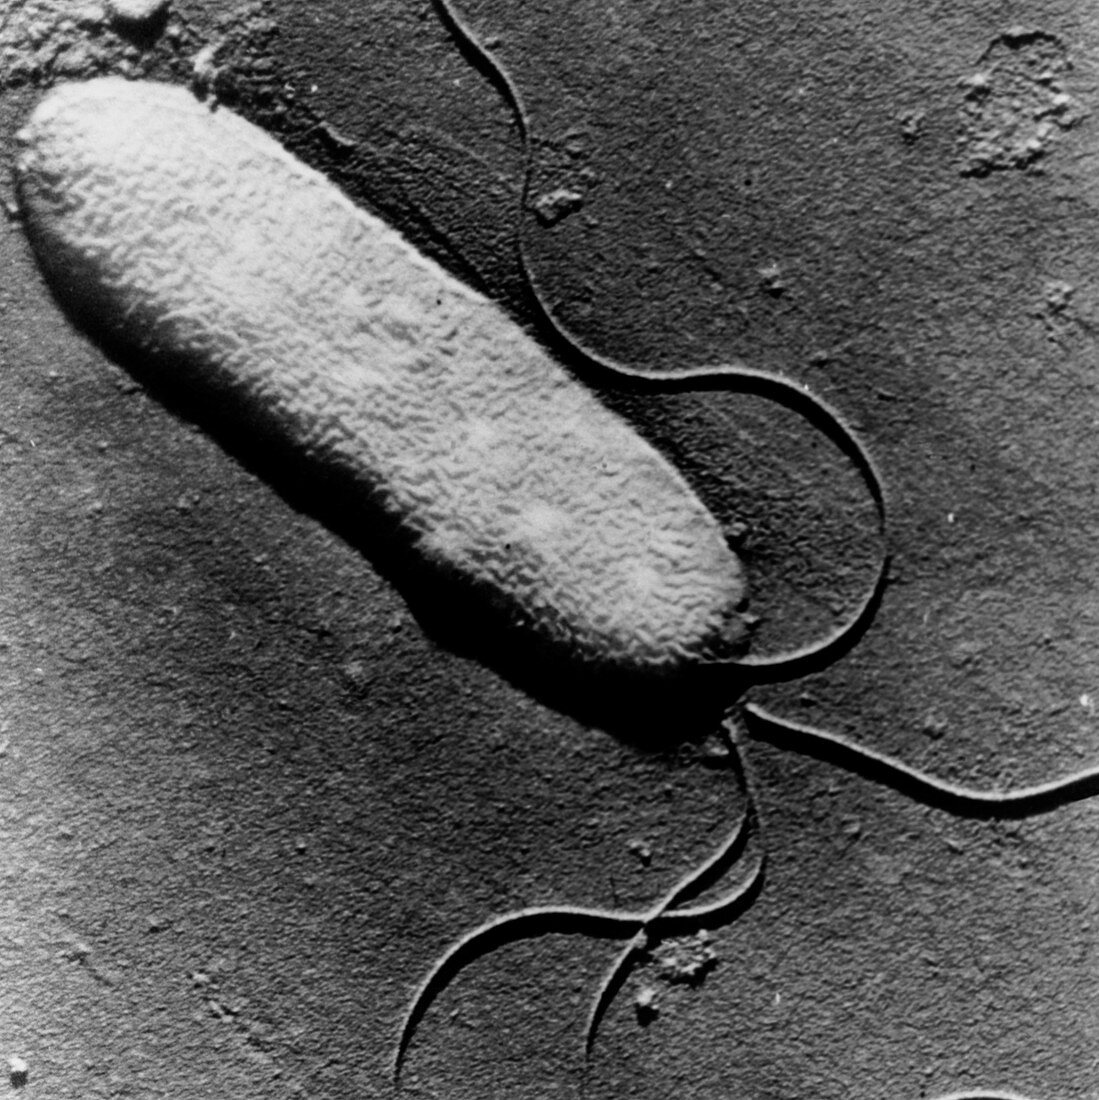 TEM of Pseudomonas syringae bacterium